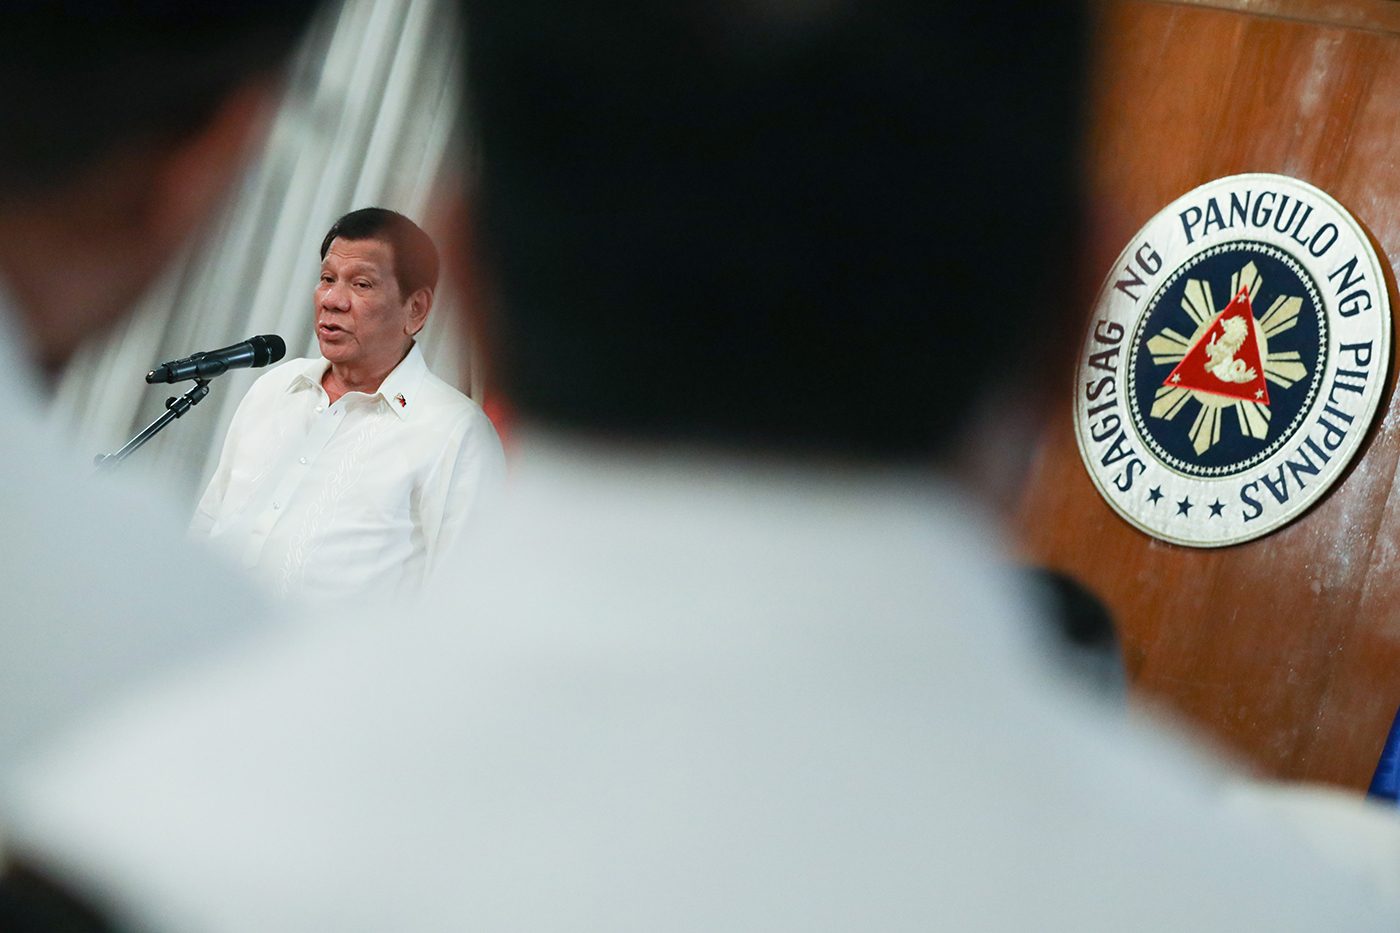 Defying court, Duterte refuses to pay Manila Water